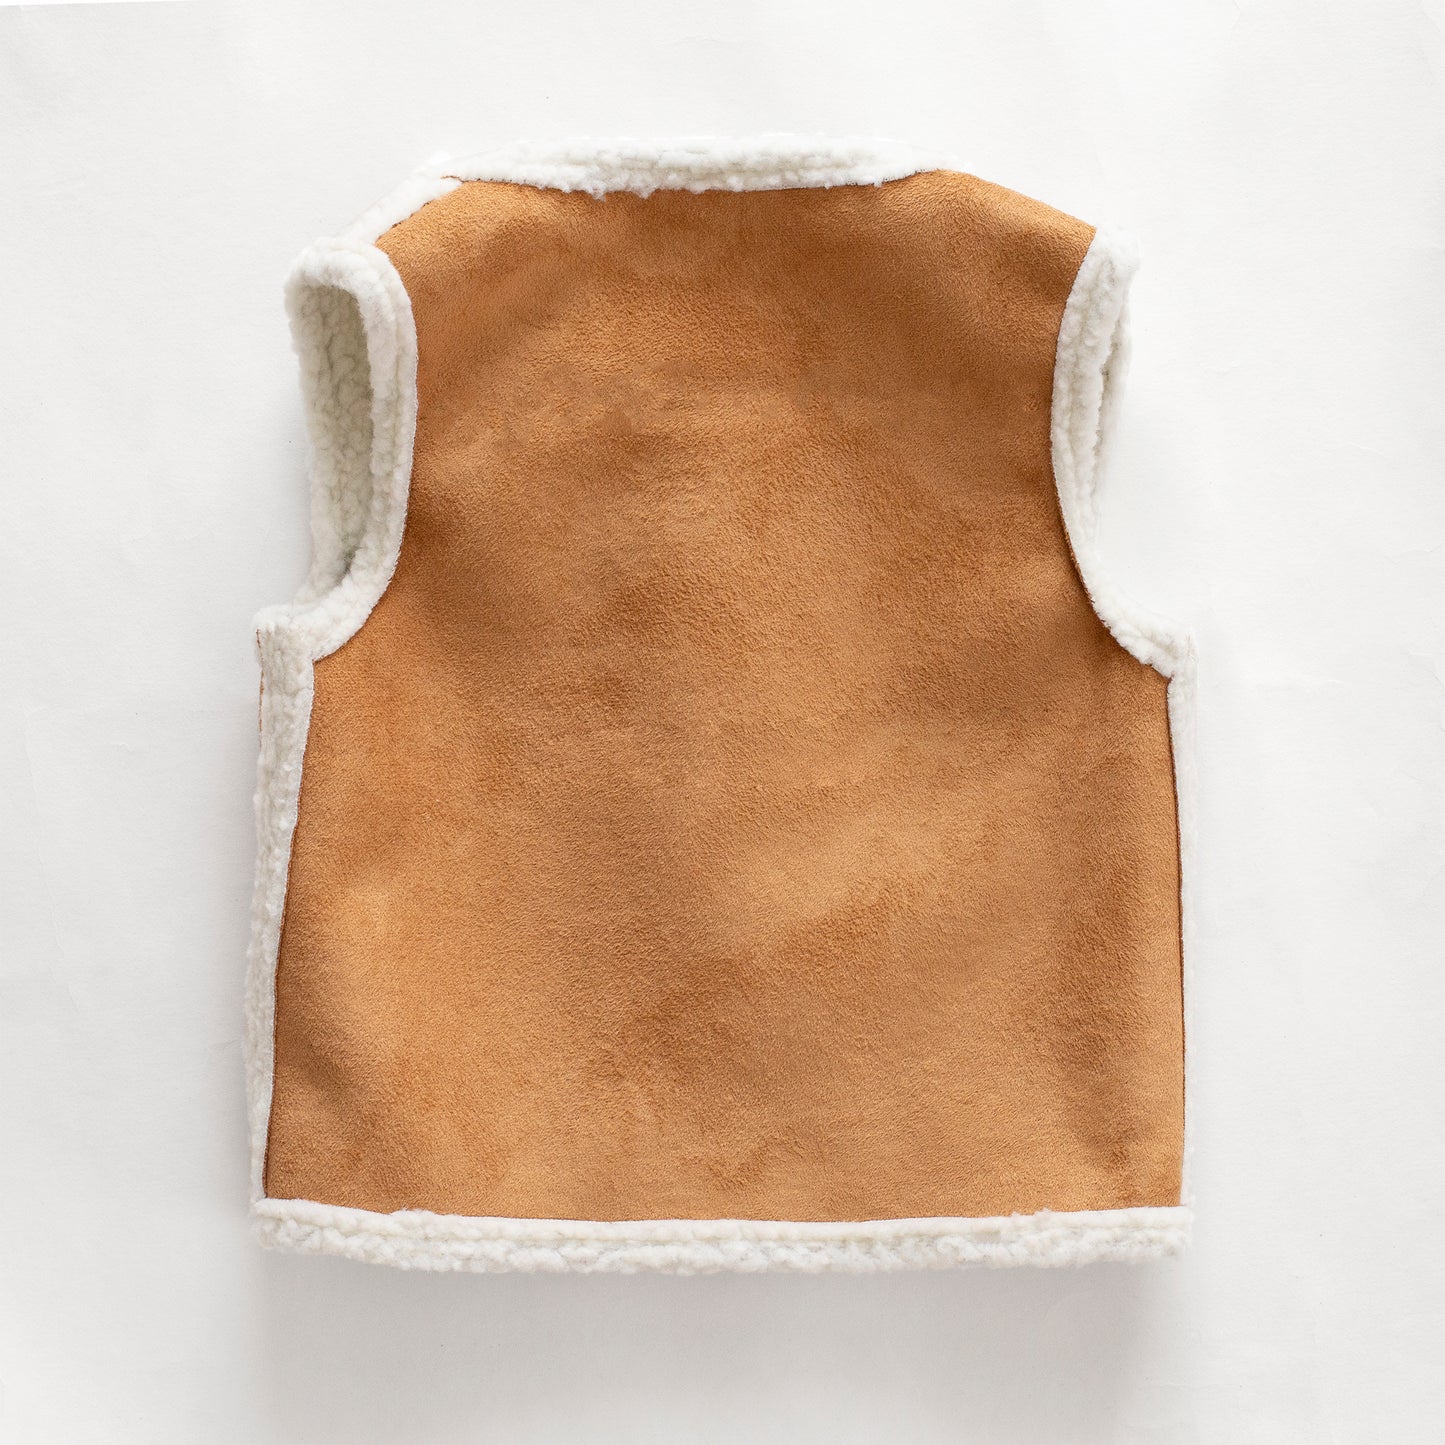 Adorable Faux Fur Sherpa Two-sided Vest Toddler vest